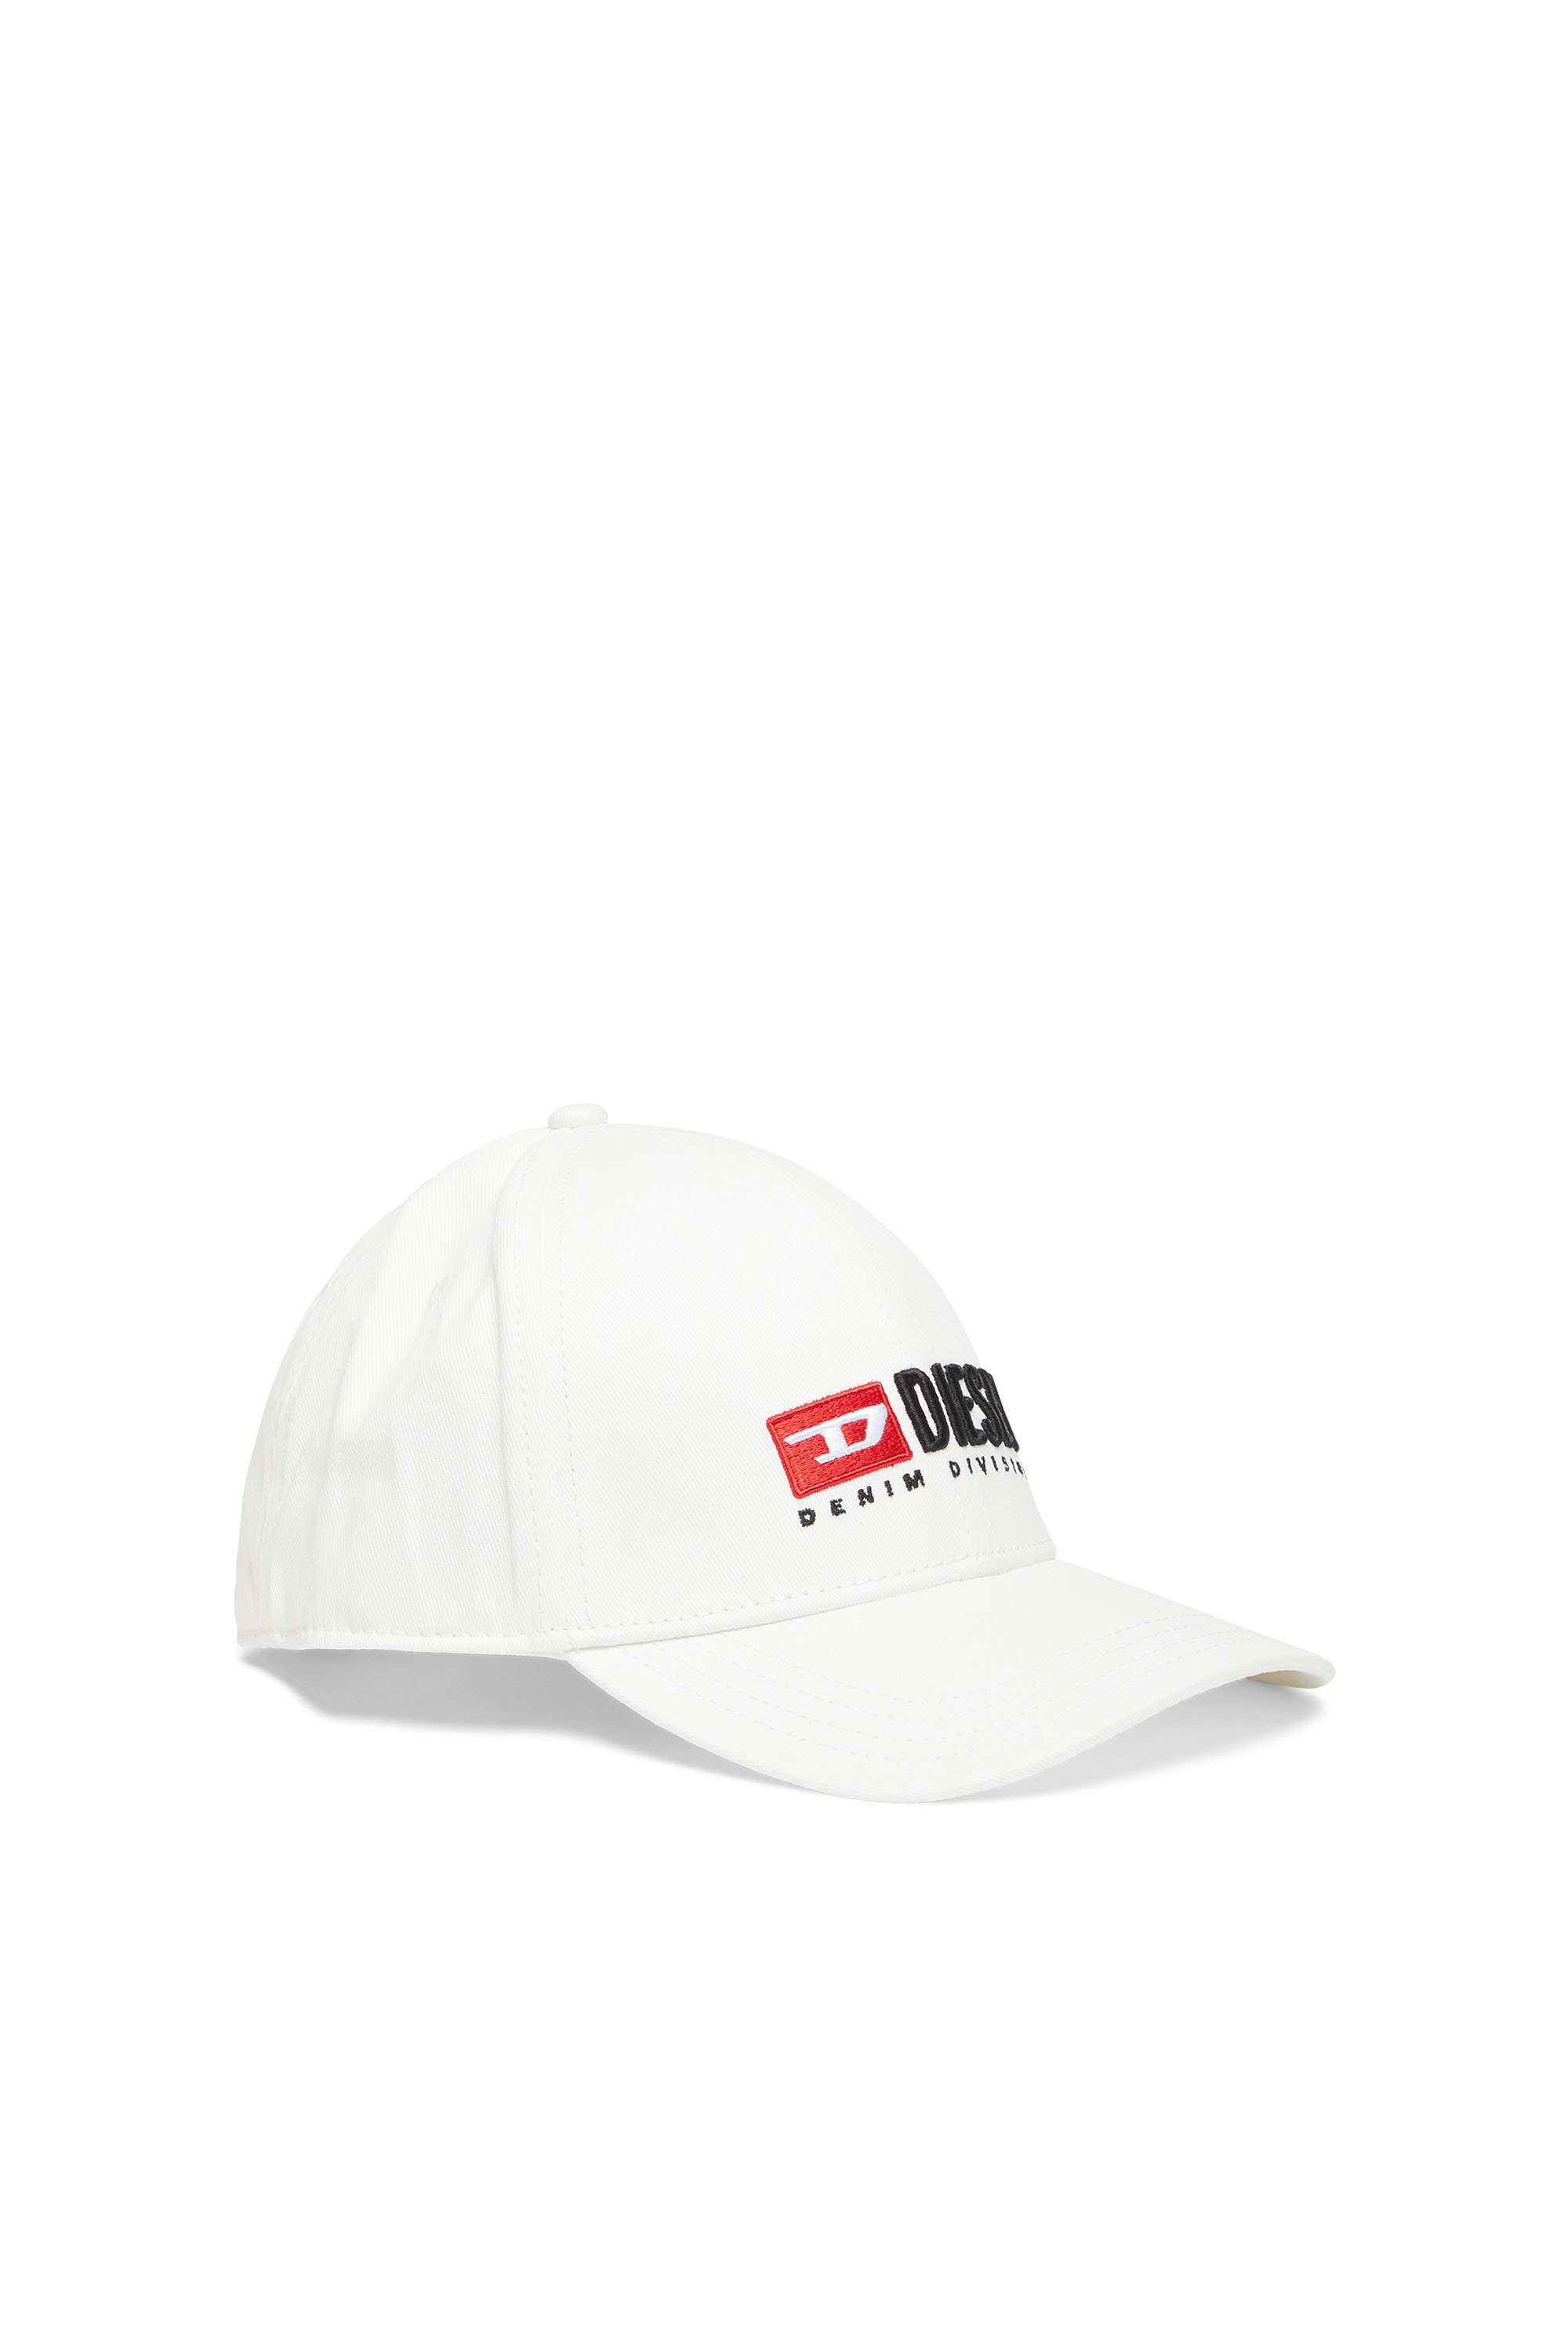 Diesel - Berretto da baseball con logo Denim Division - Cappelli - Unisex - Bianco